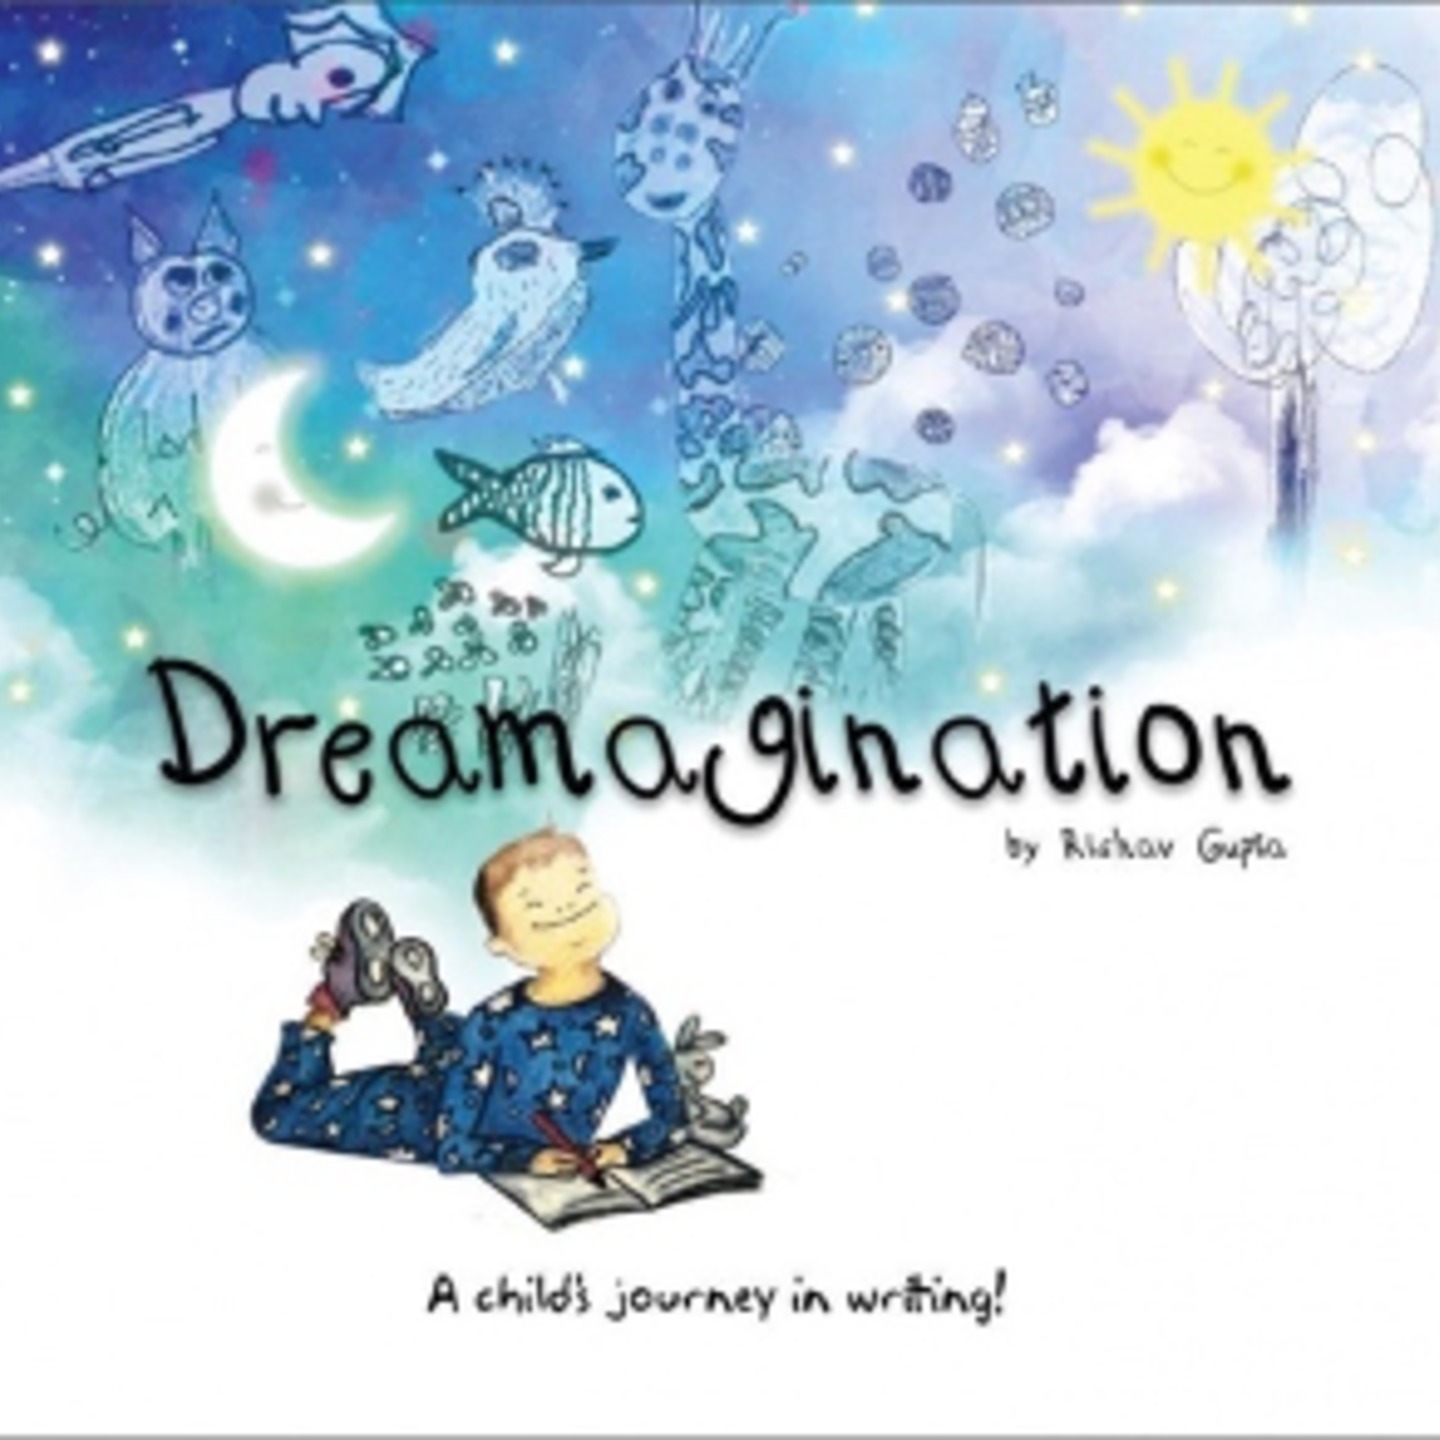 Dreamagination by Rishav Gupta